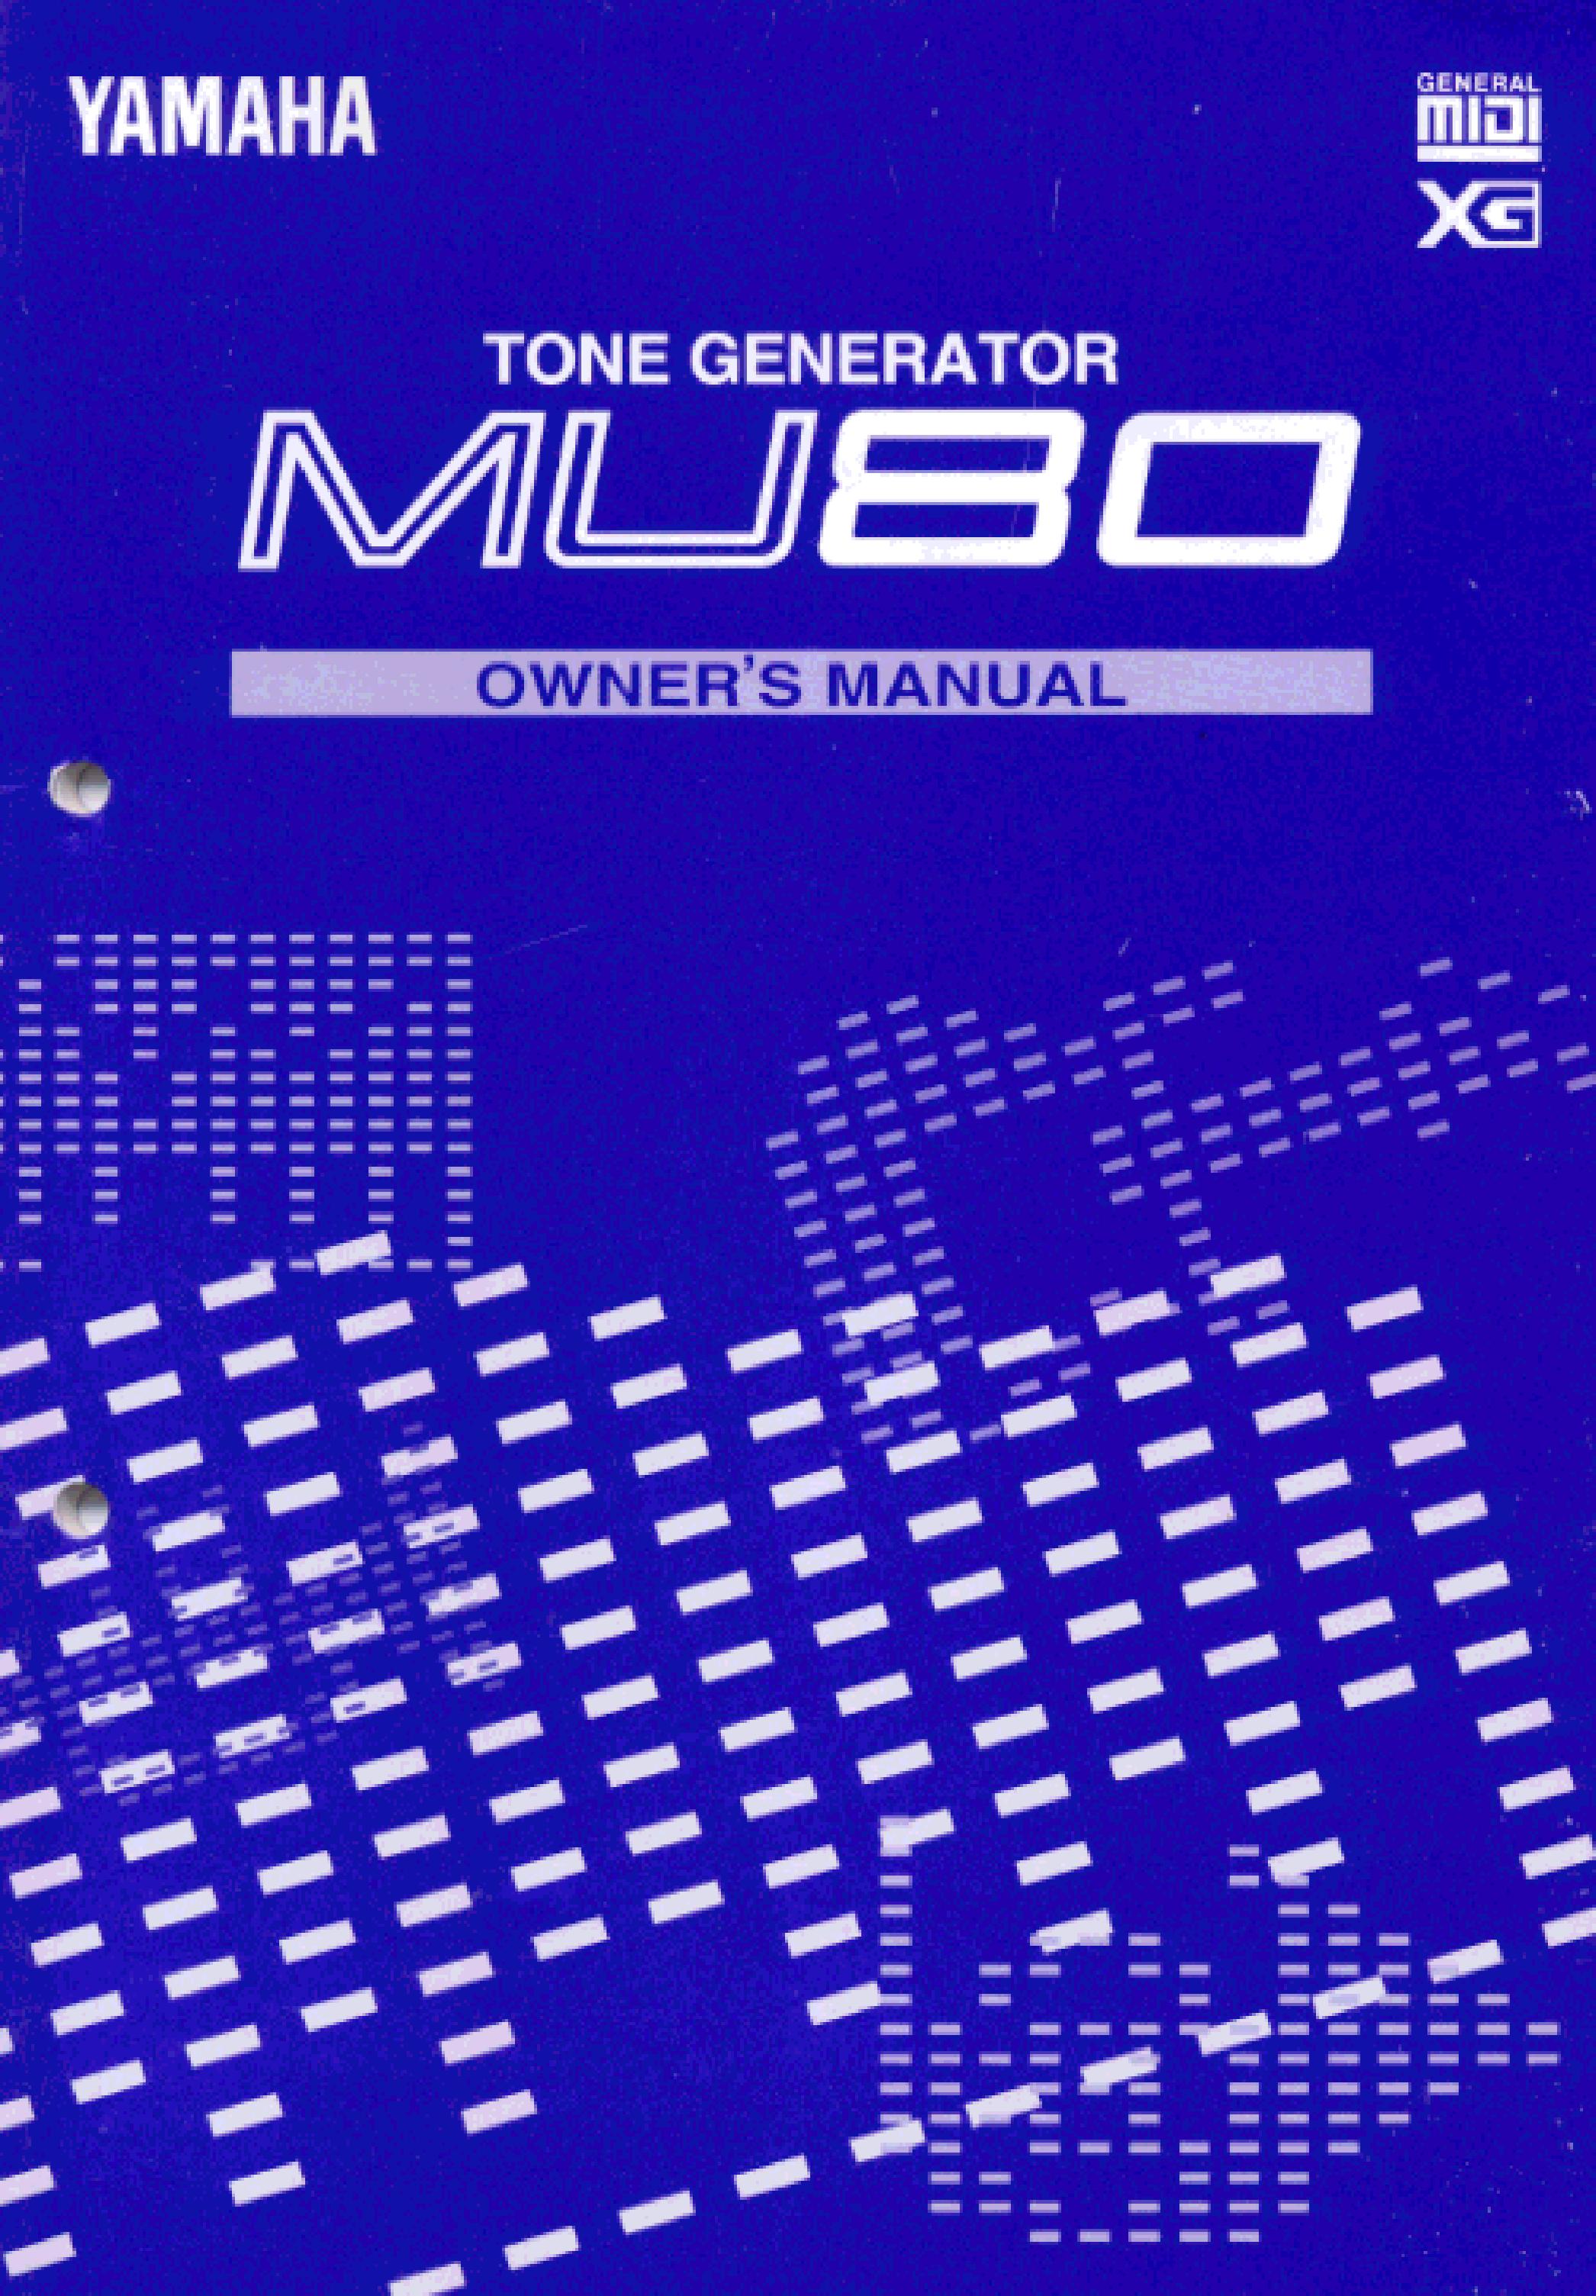 Yamaha MU80 Portable Generator User Manual